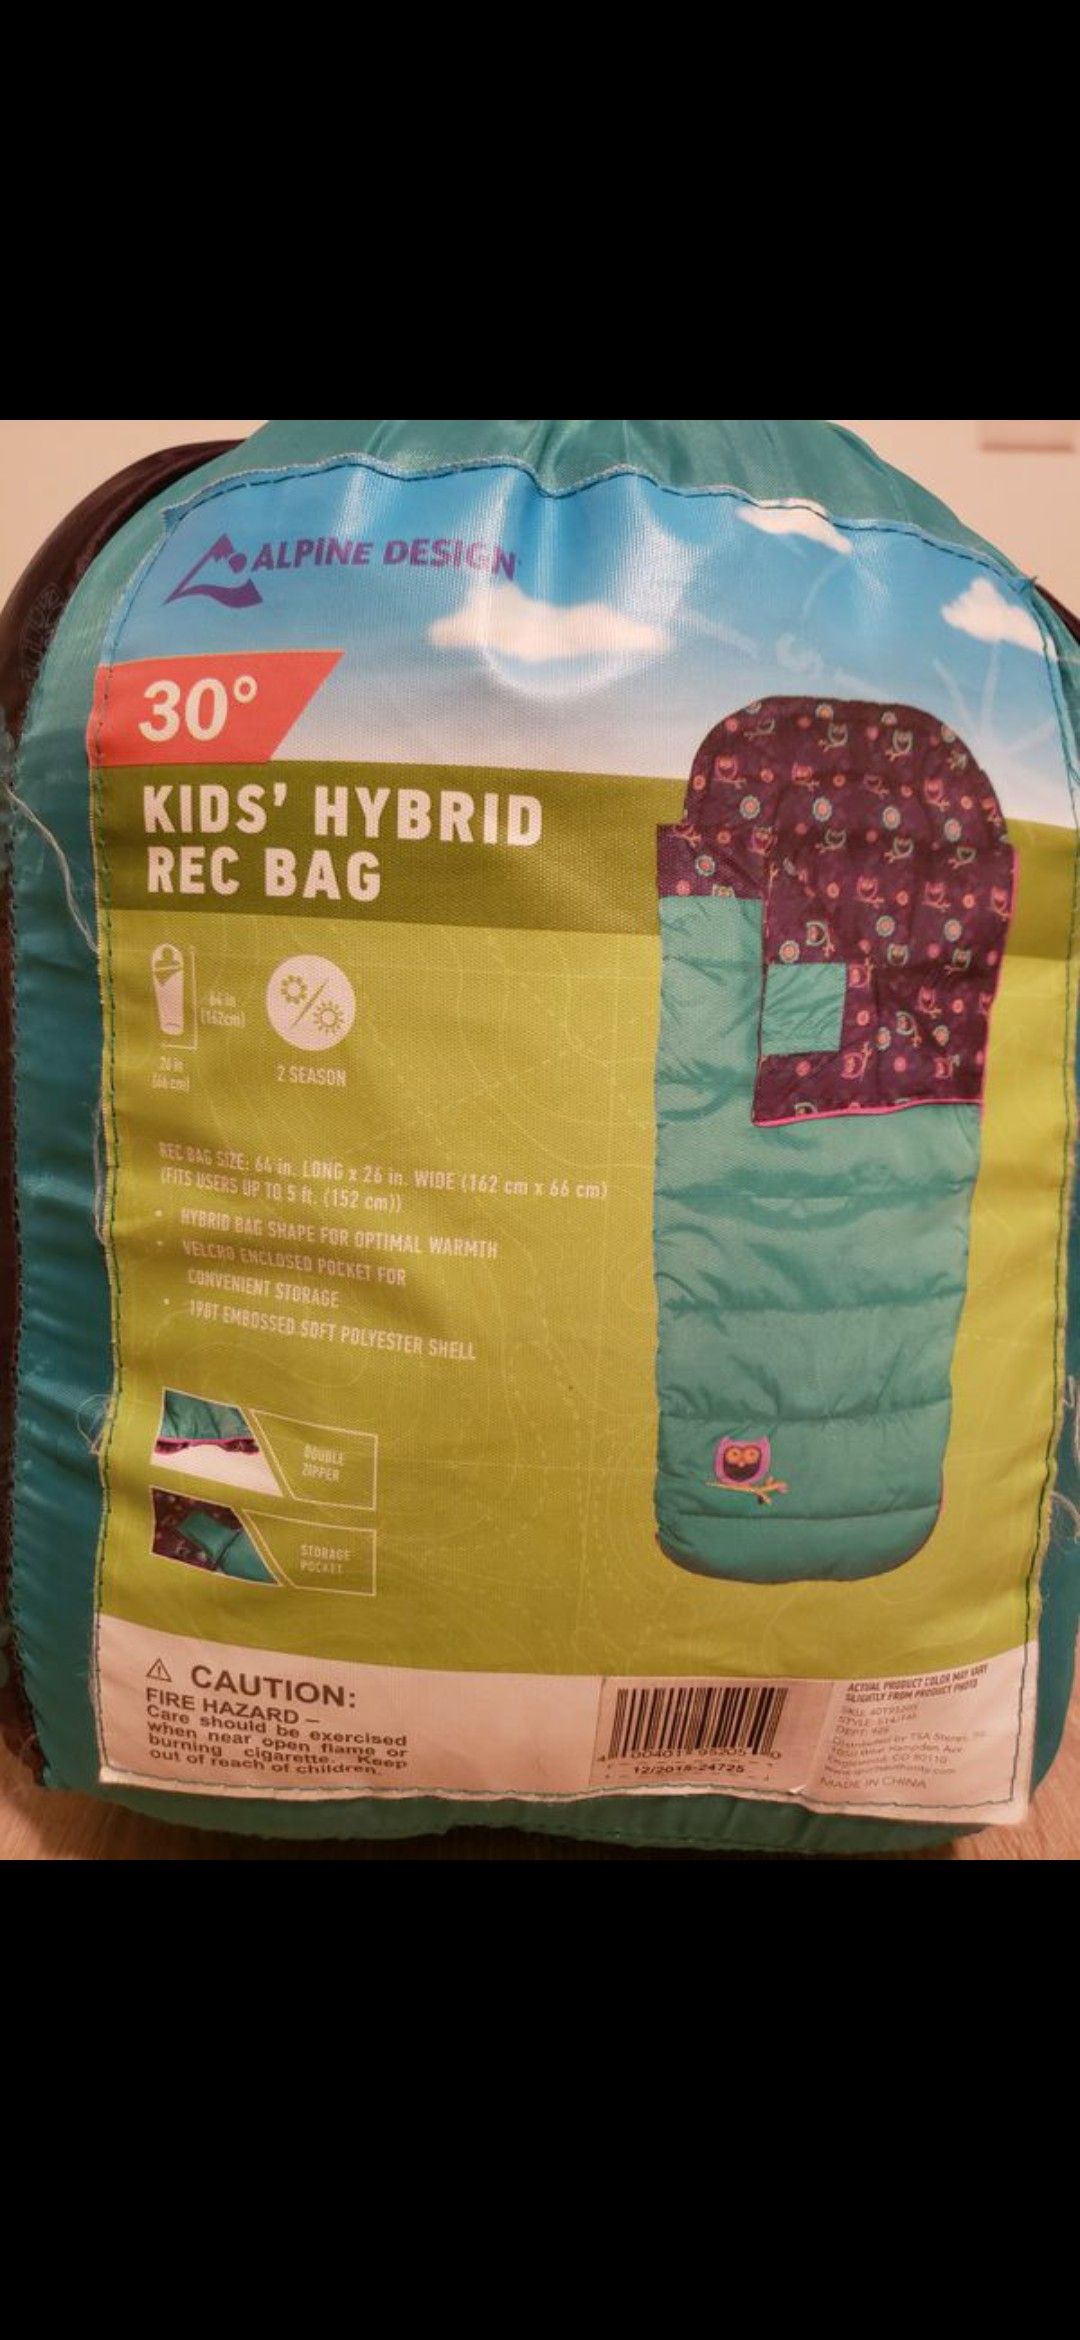 Kids' Hybrid rec bag sleeping bag